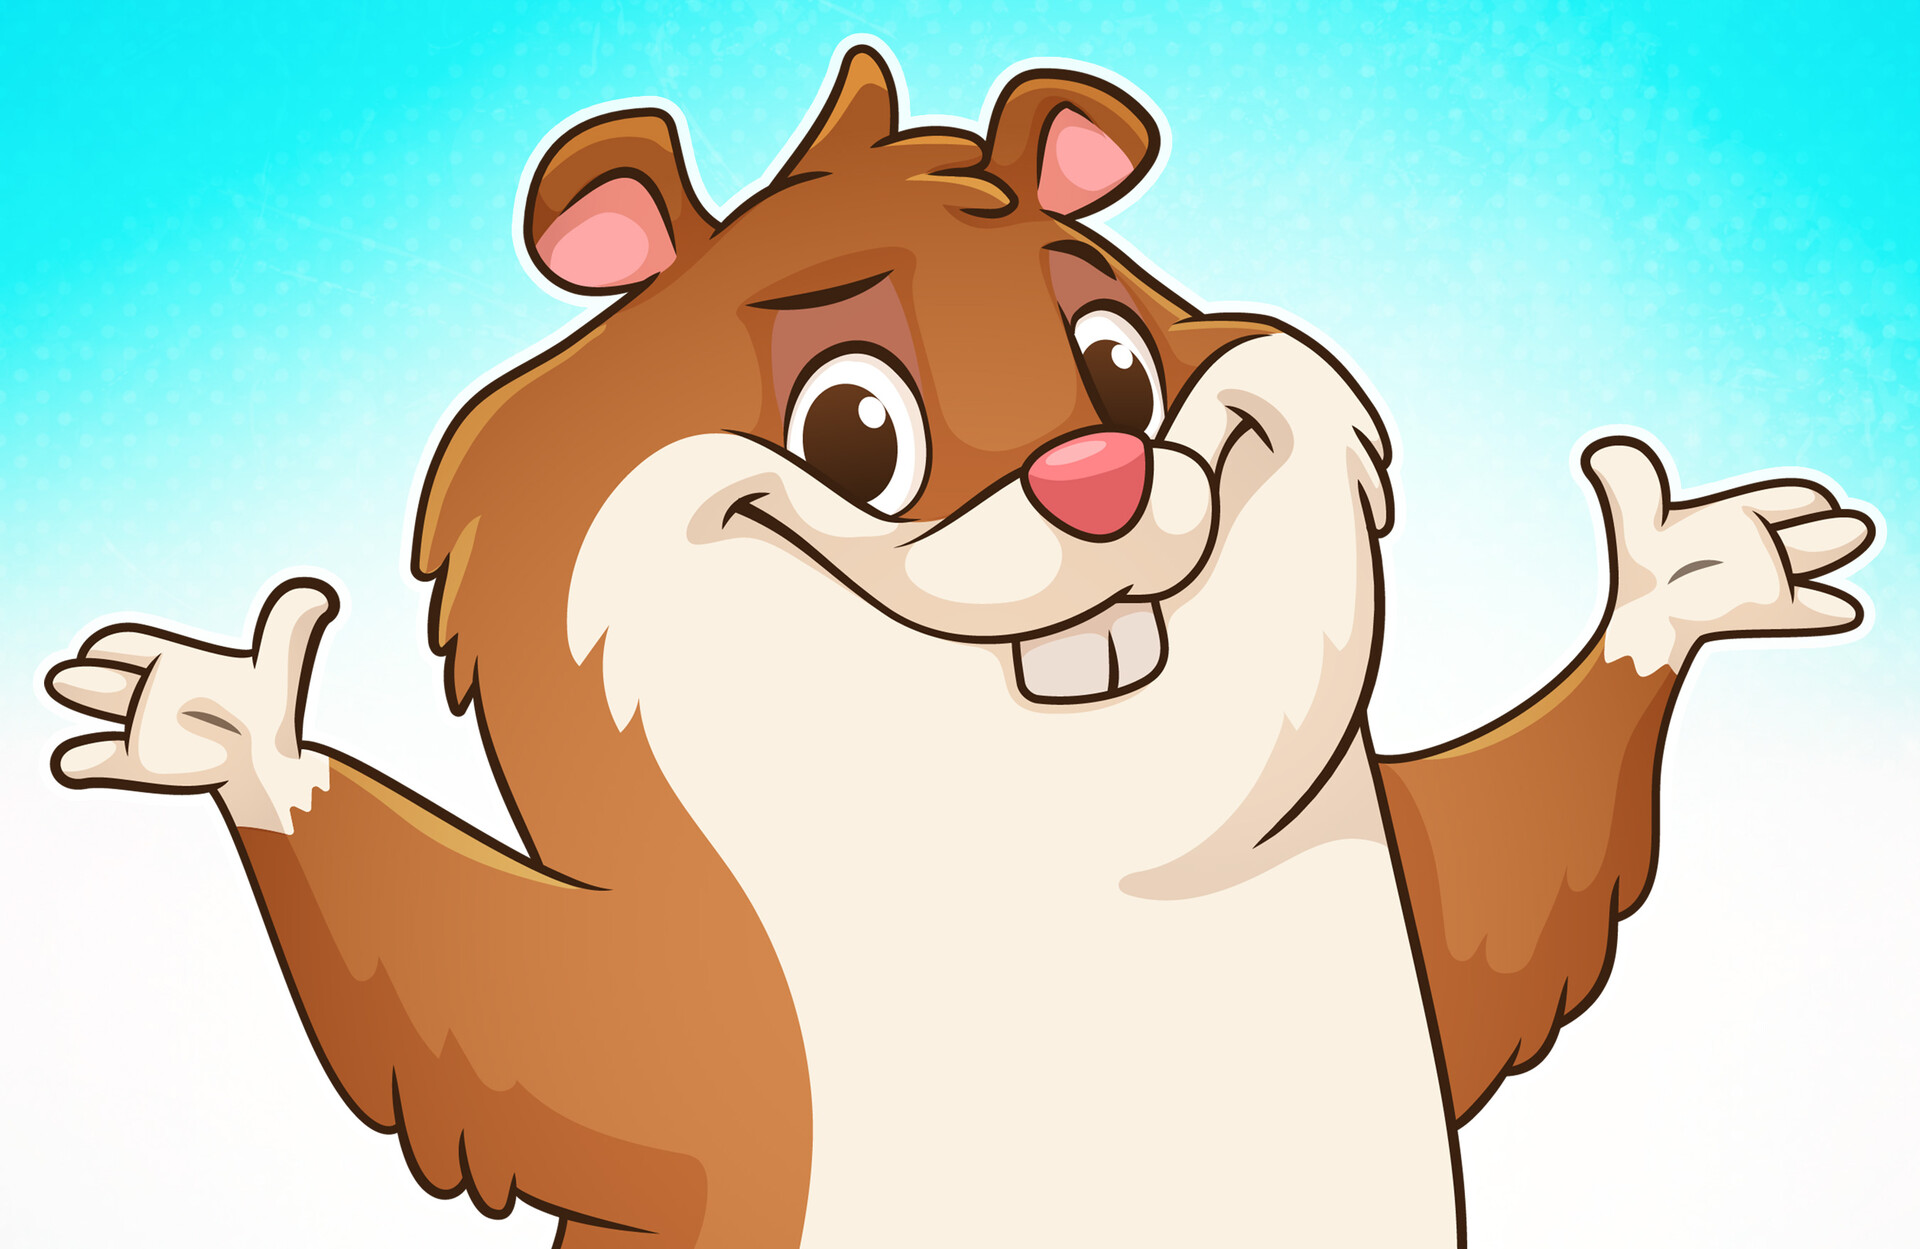 ArtStation - cute hamster cartoon character